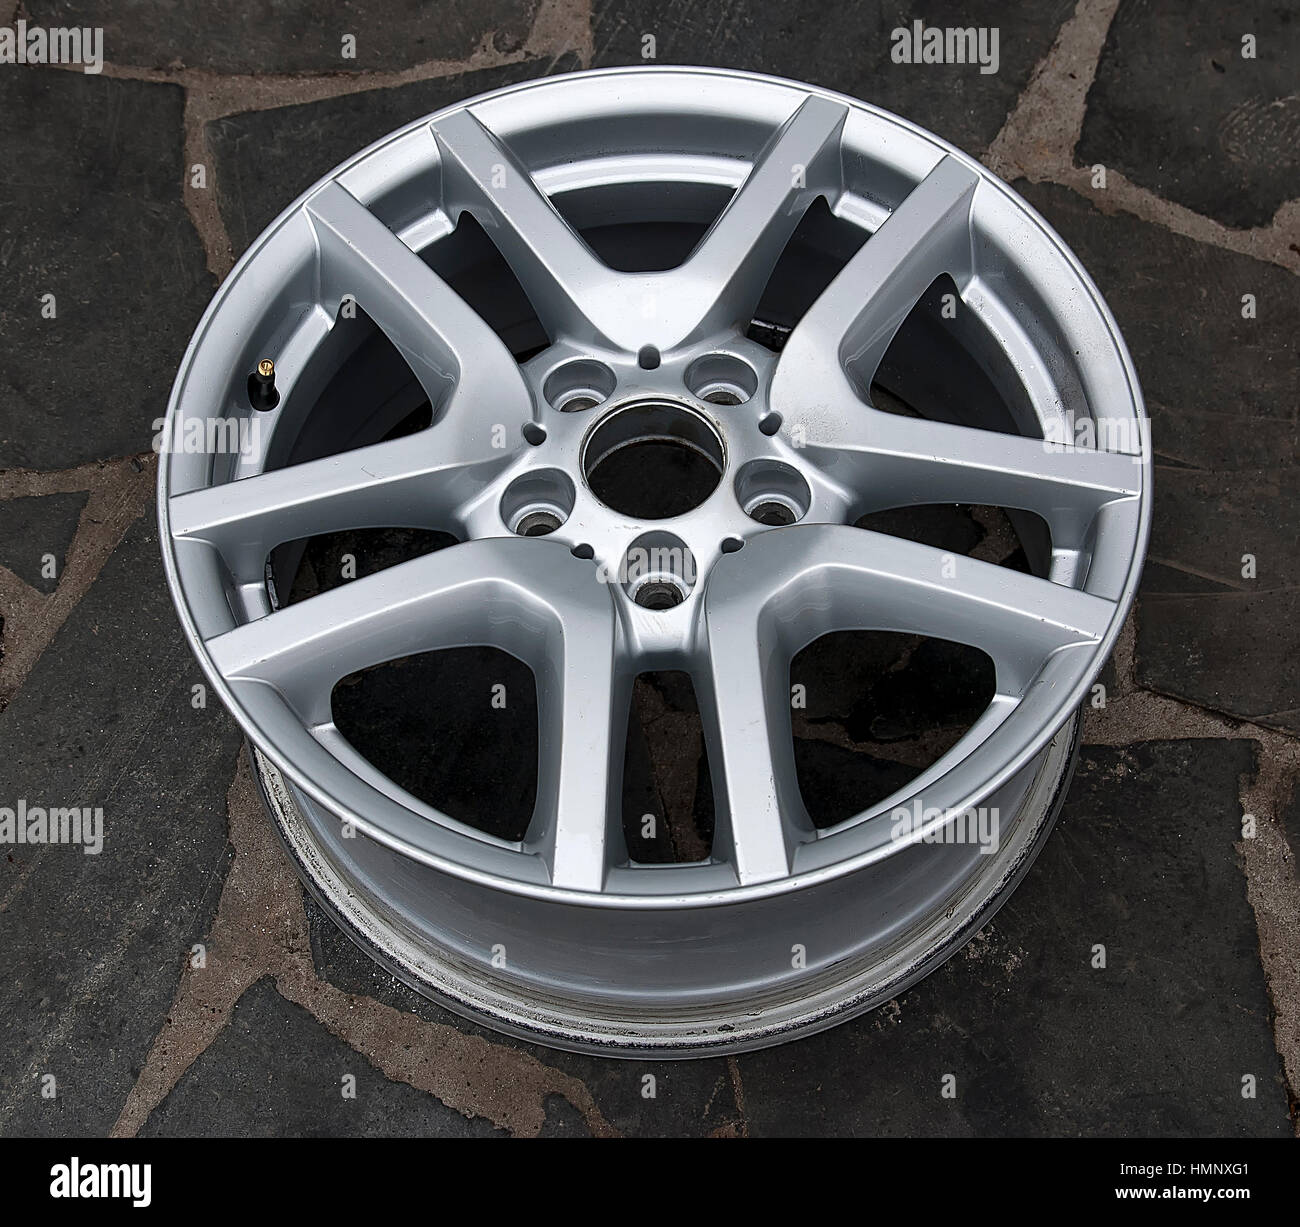 Las ruedas de titanio para auto neumático de coche Foto de stock